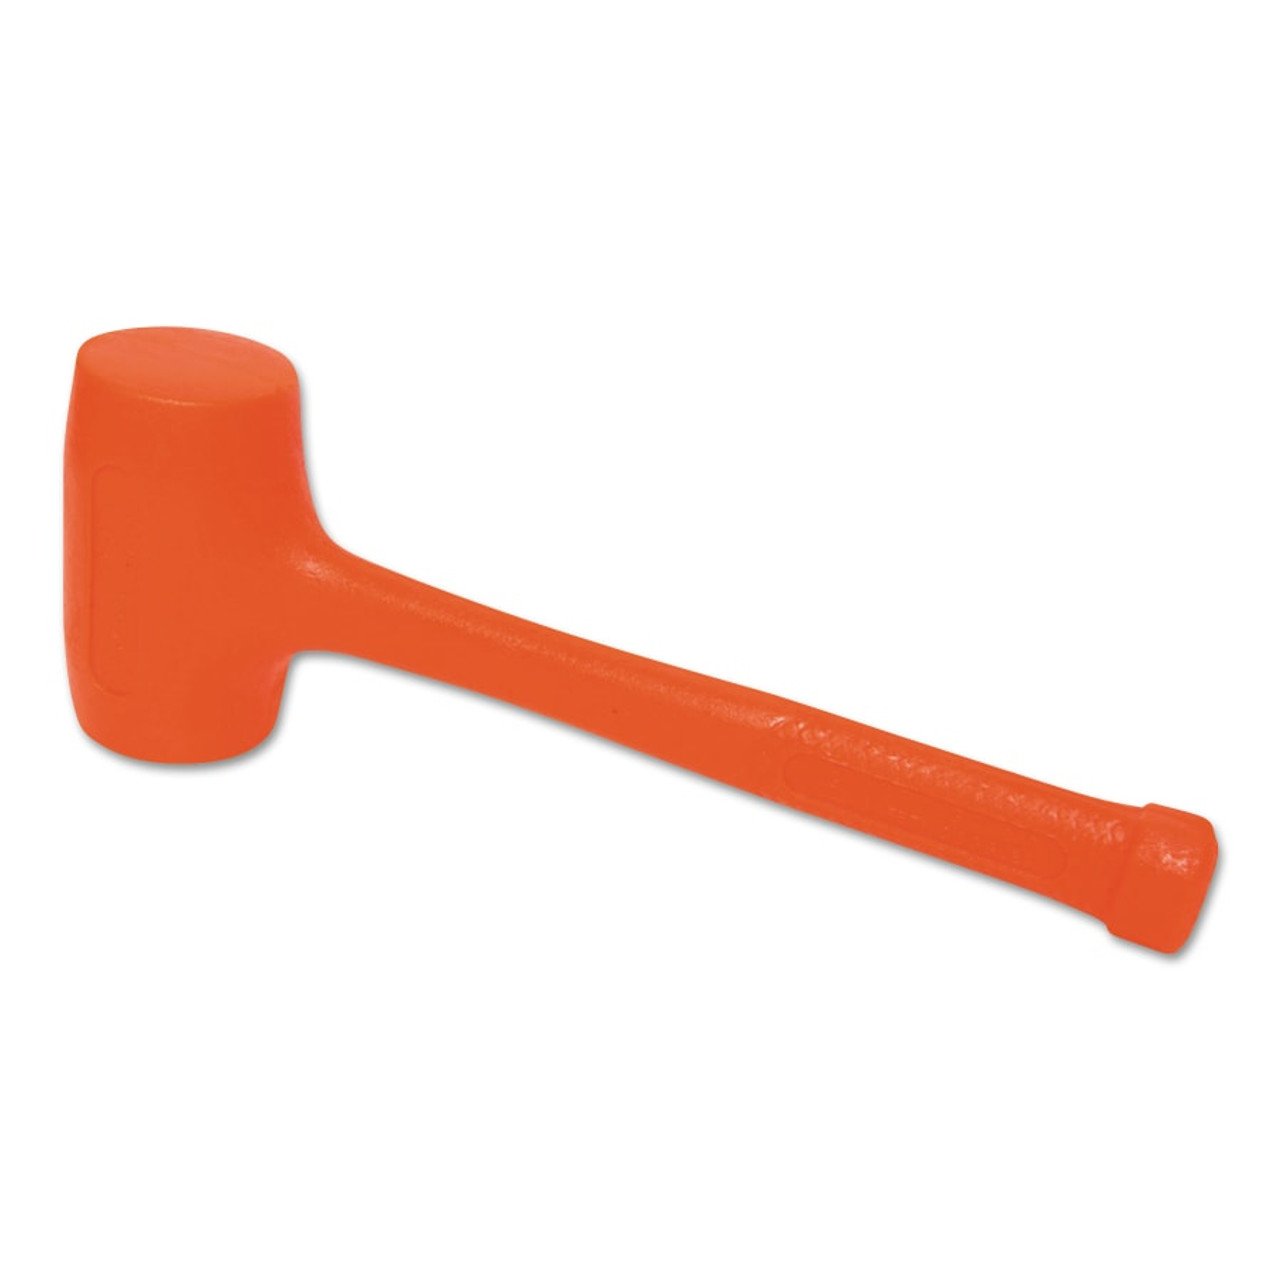 Soft Face Hammer, 52 oz Head, 2-1/2 in Diameter, Orange (57-534)